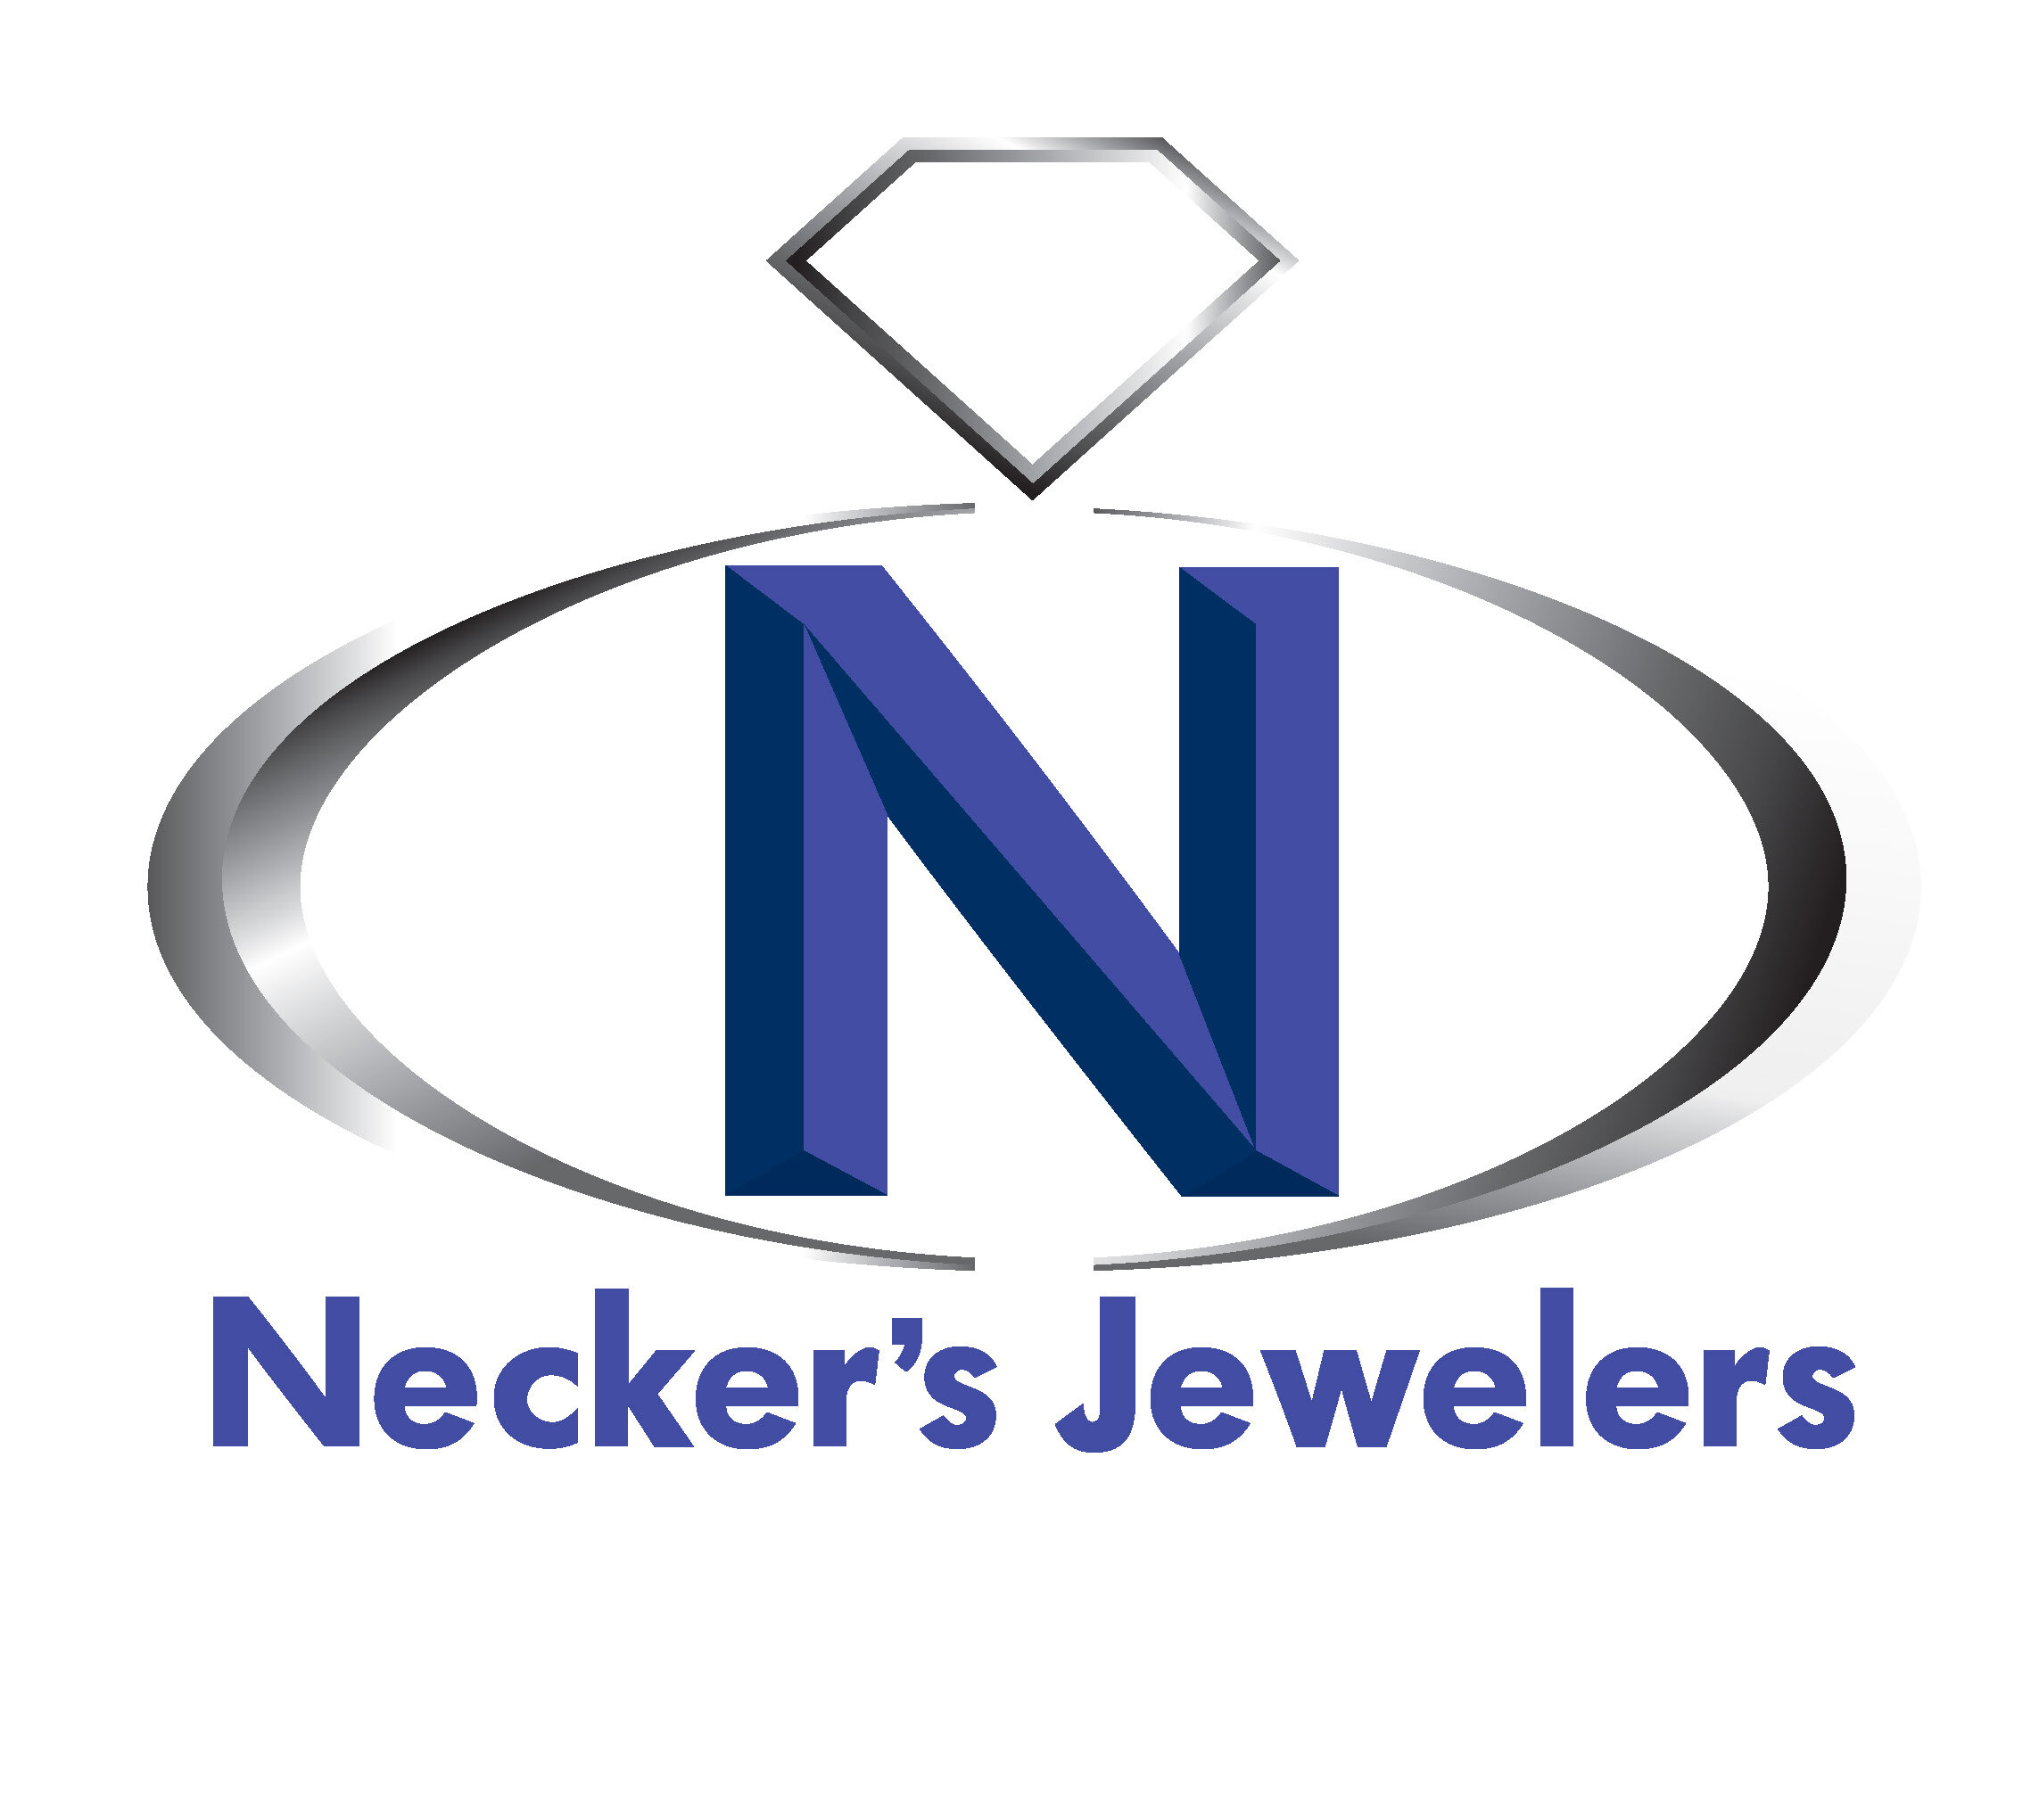 Necker's Jewelers - Co-Presenting Sponsor